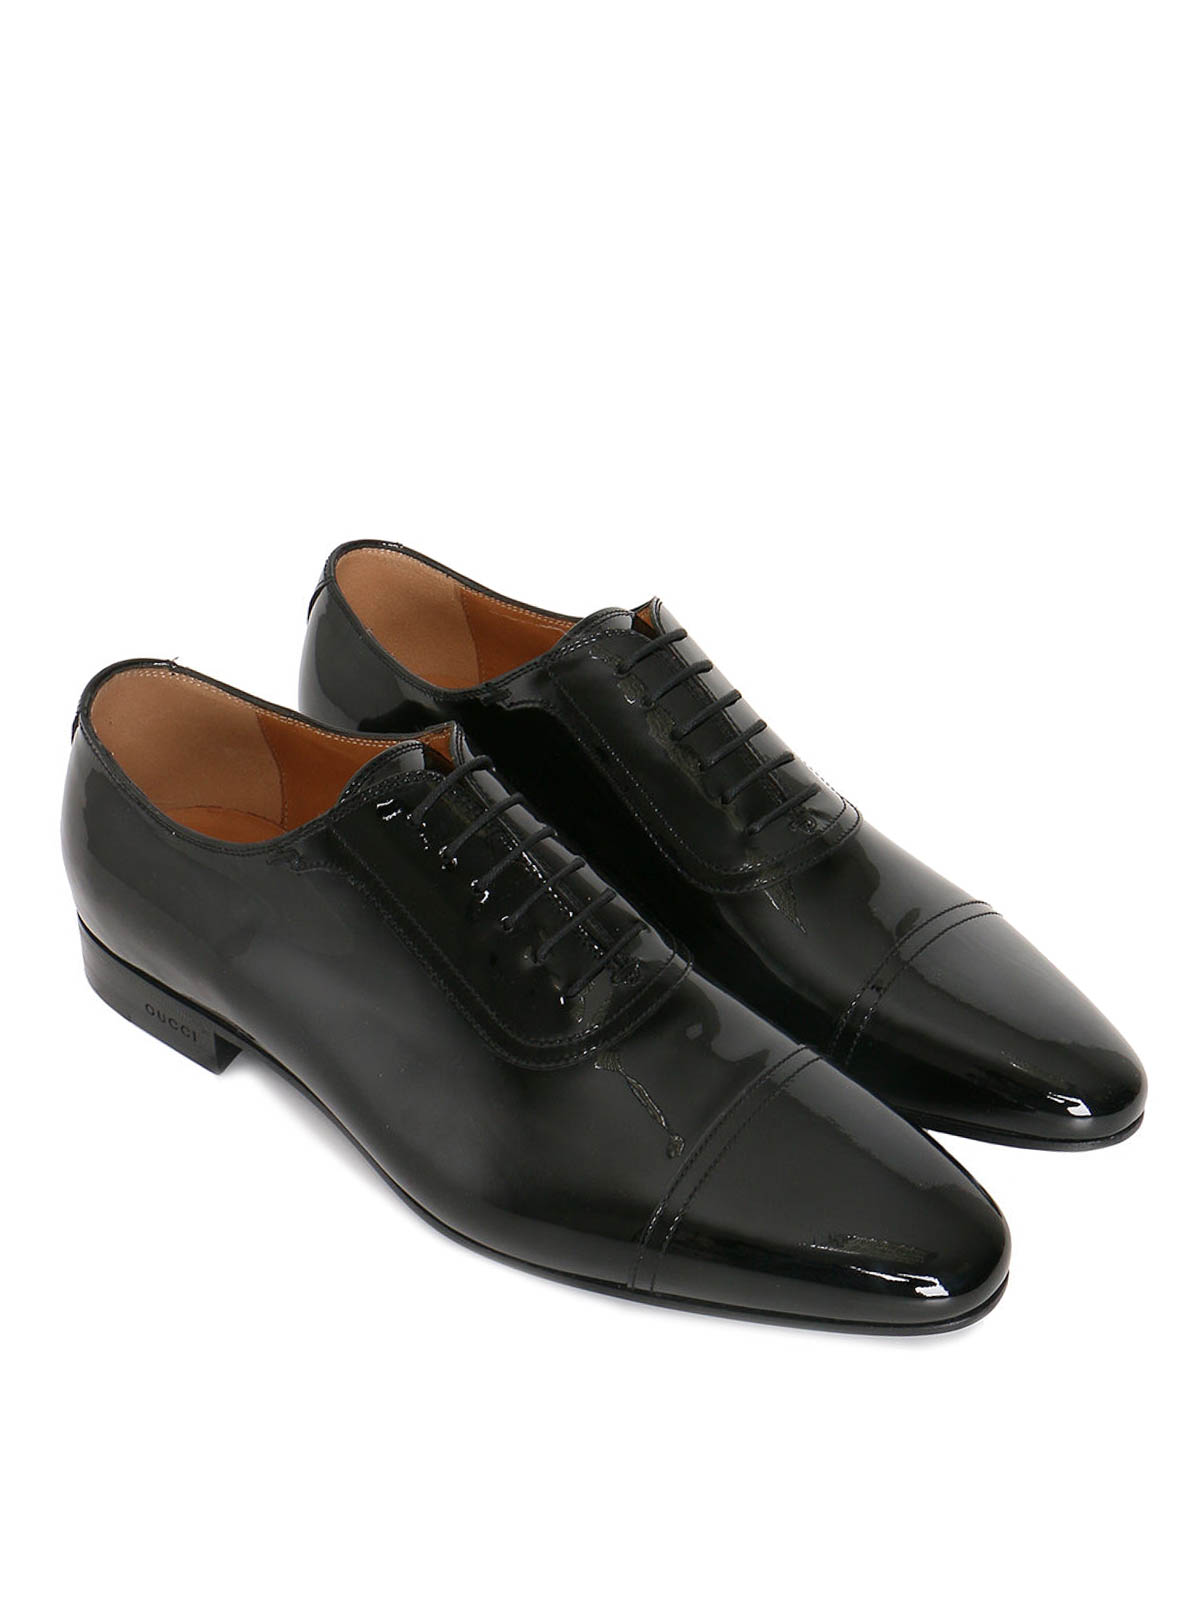 Clásicos Gucci - Zapato Negro Hombre - 407290BNC001000